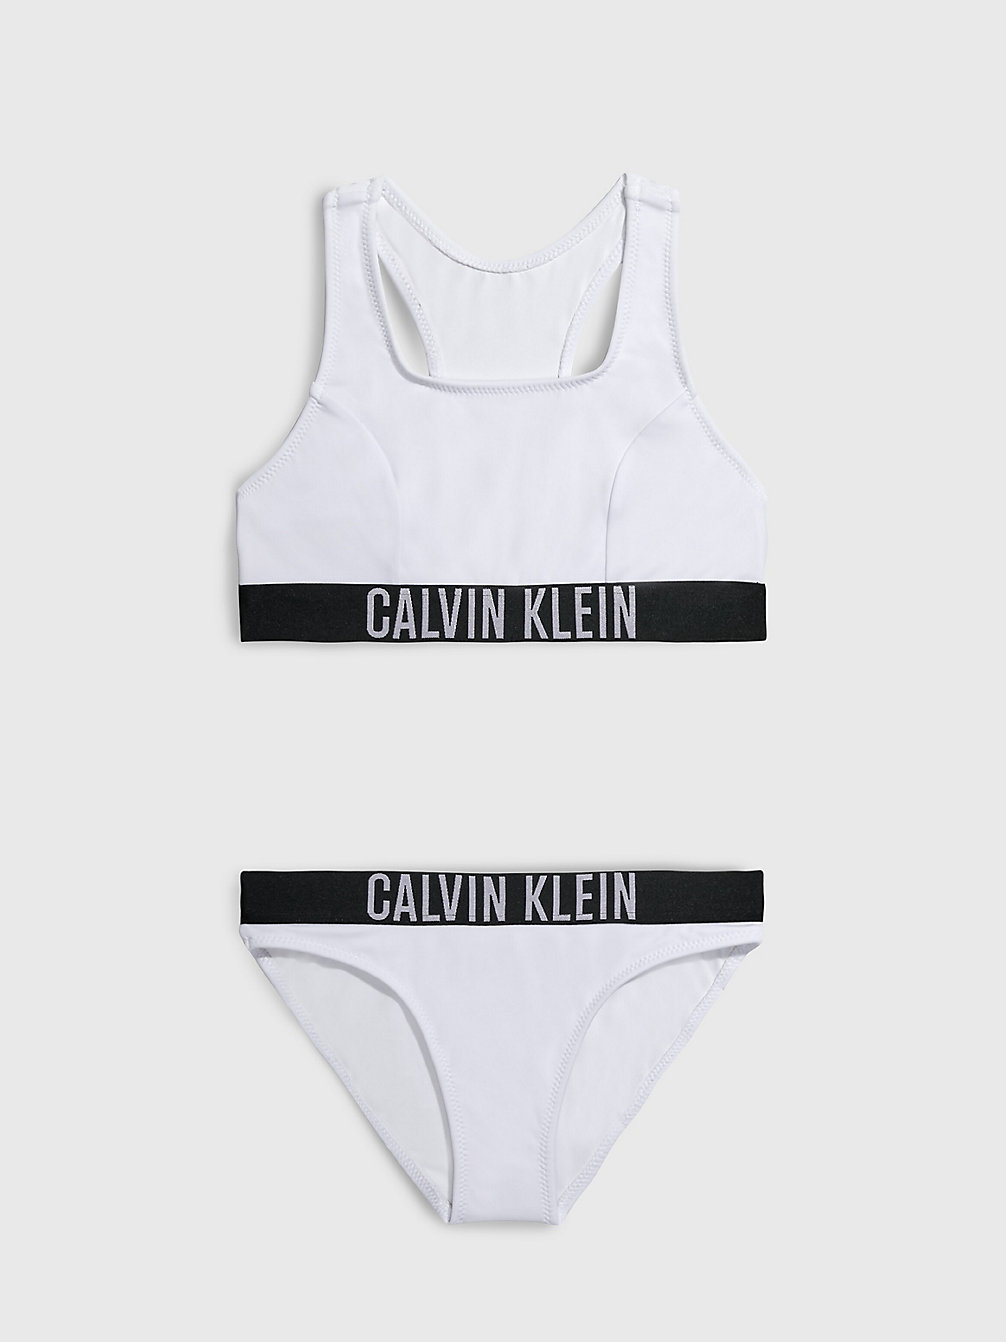 PVH CLASSIC WHITE Girls Bralette Bikini Set - Intense Power undefined girls Calvin Klein